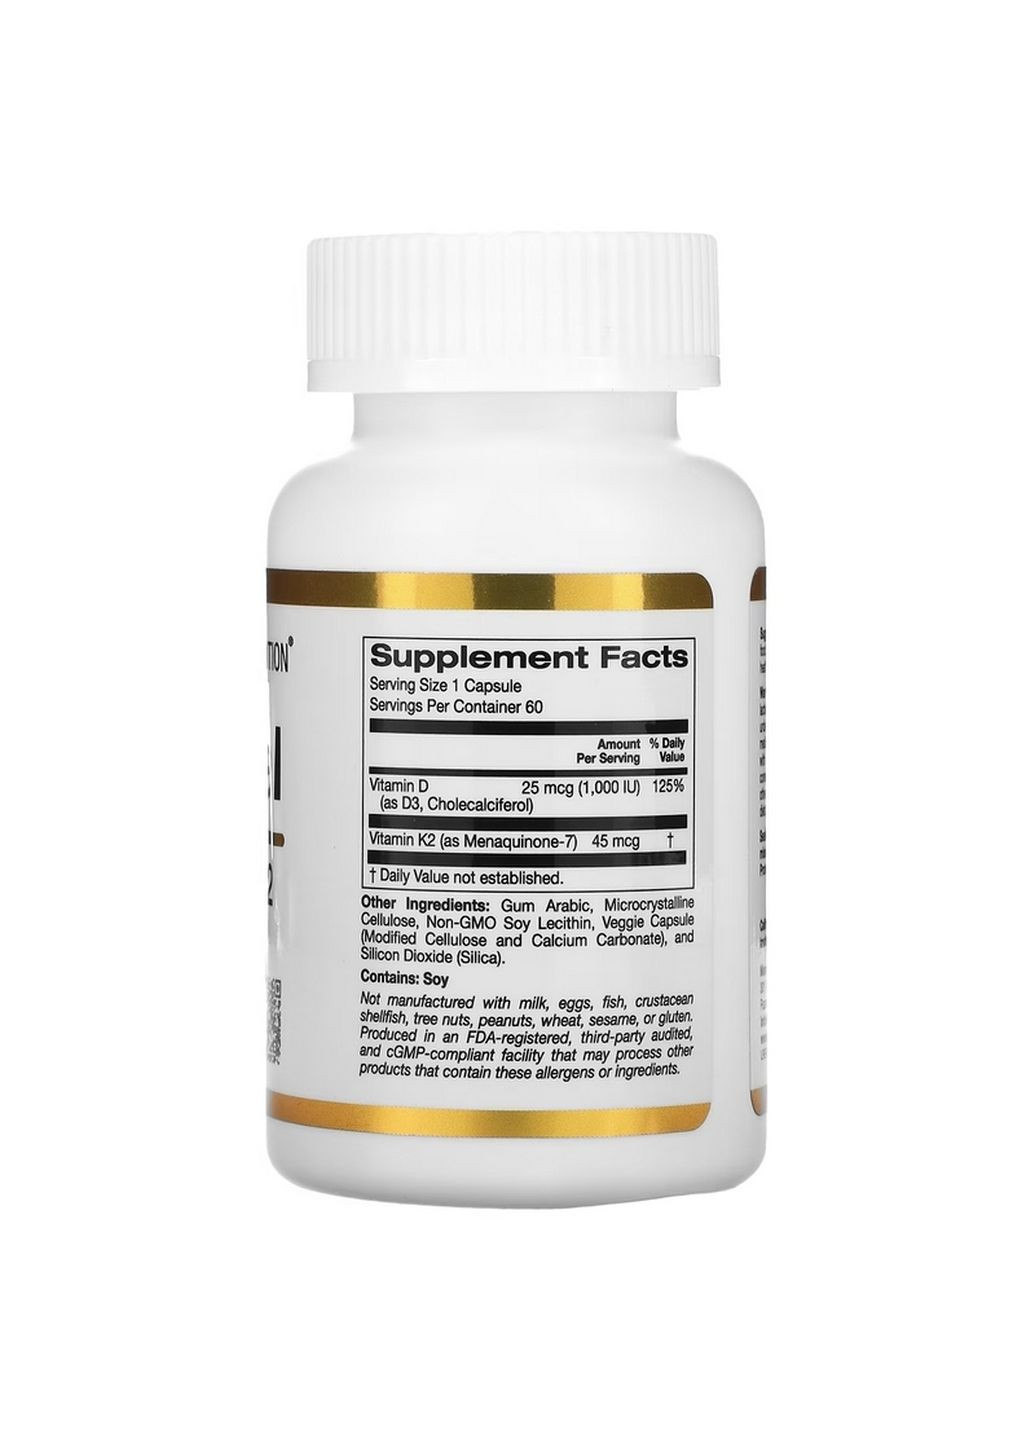 Витамины и минералы Liposomal Vitamin K2+ D3, 60 вегакапсул California Gold Nutrition (293419005)